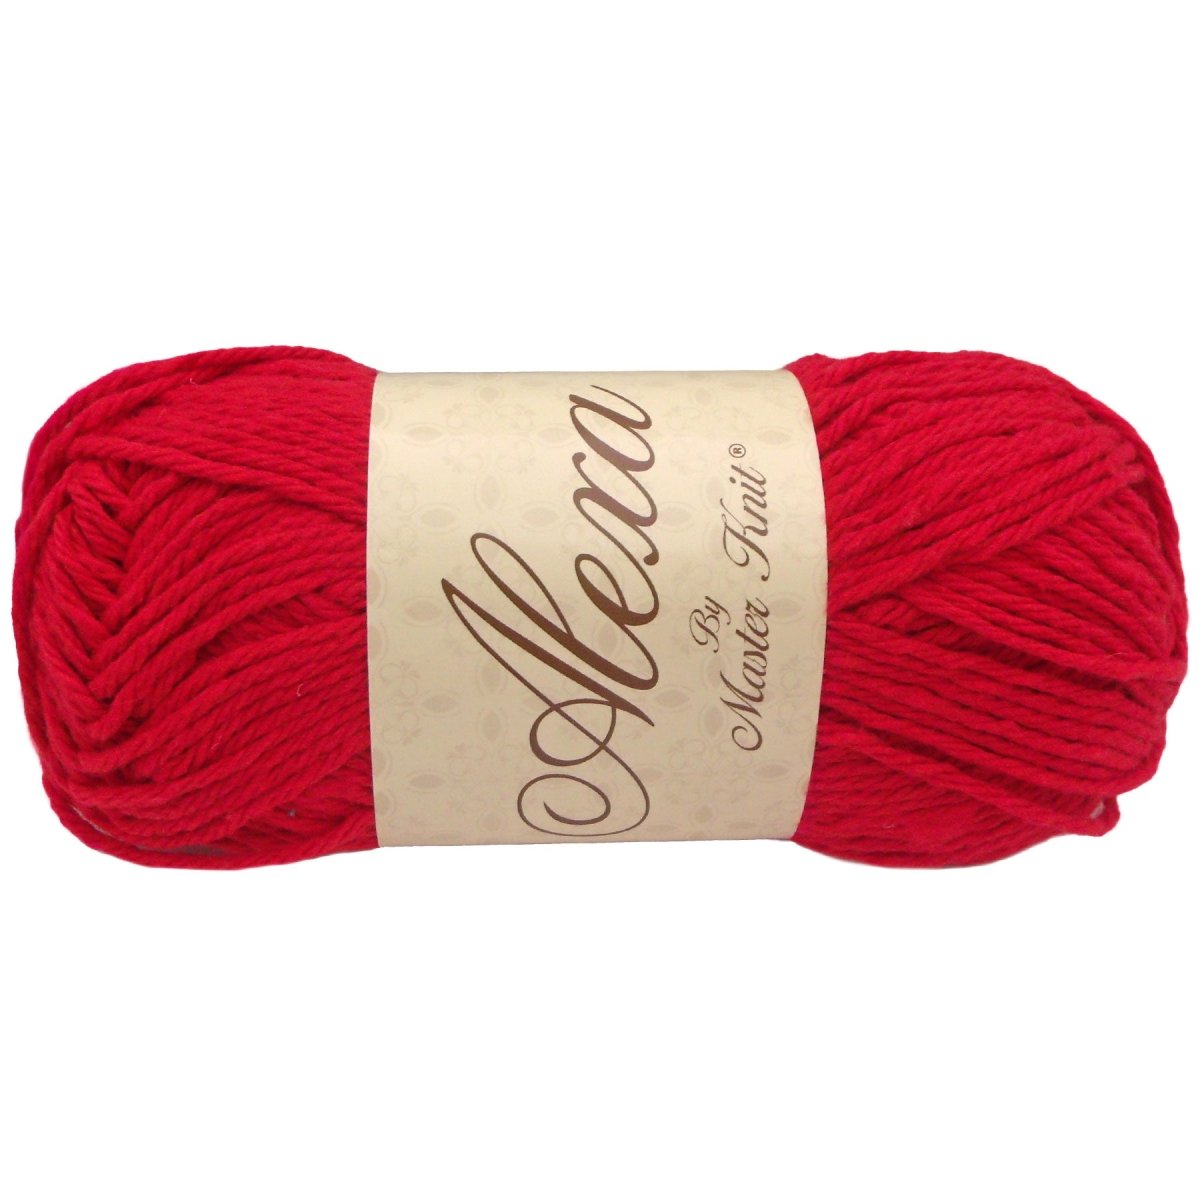 ALEXA - Crochetstores9340-132